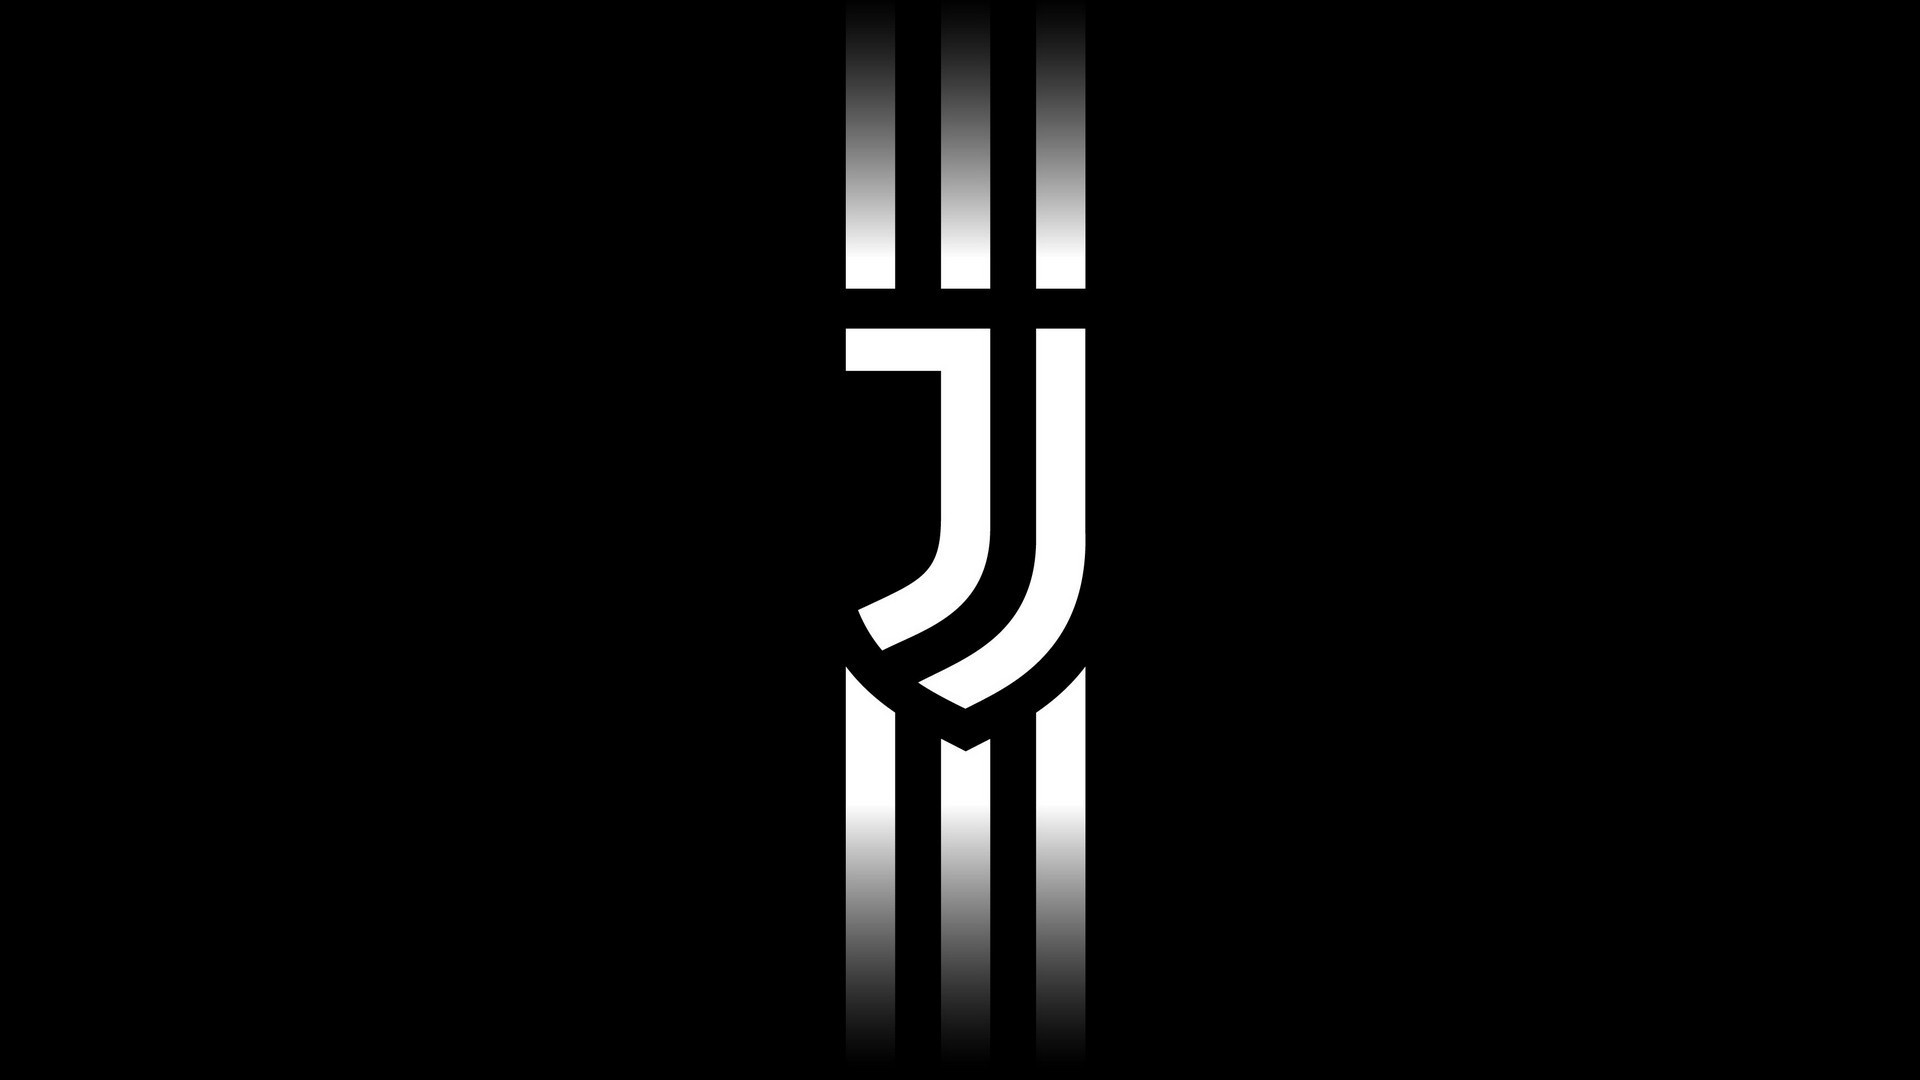 Juventus: Nicknamed Vecchia Signora, the club has won 36 official league titles. 1920x1080 Full HD Wallpaper.